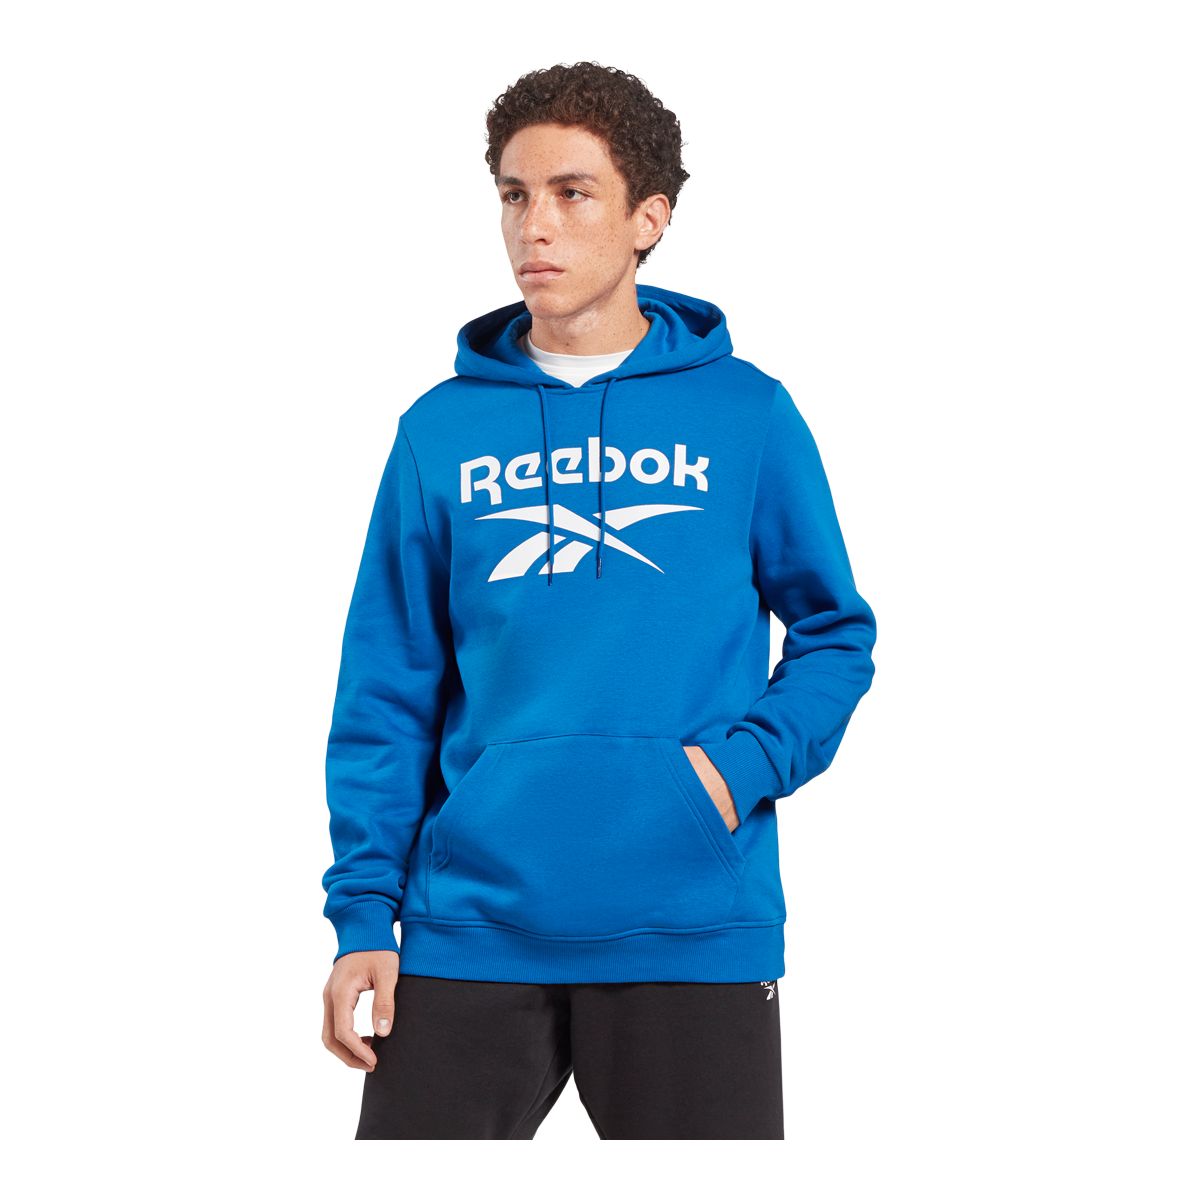 Reebok Men's Id Fleece Stacked Logo Pullover Hoodie